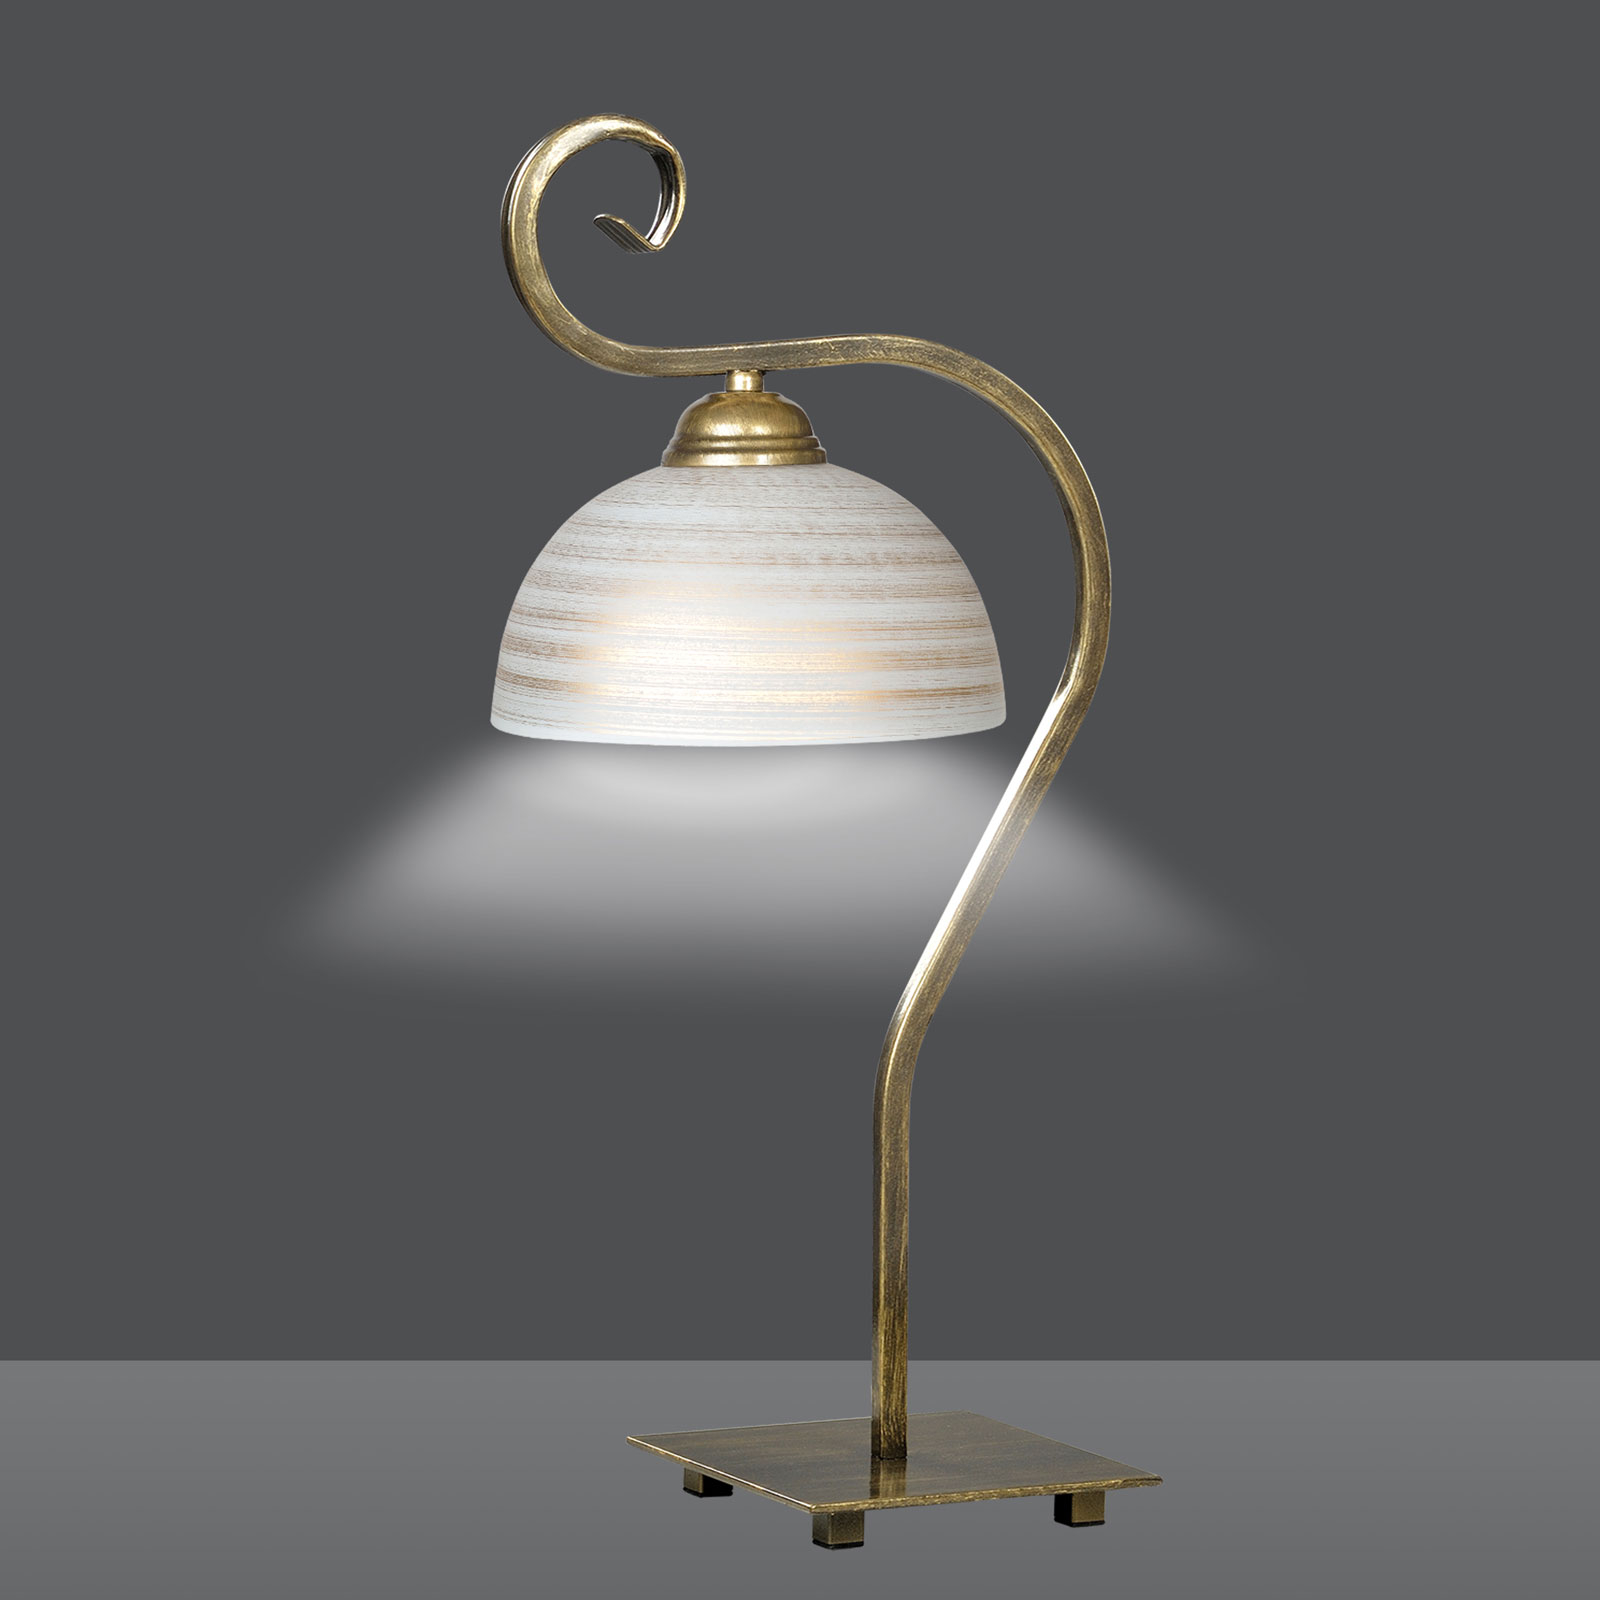 Lampe à poser Wivara LN1 design classique, dorée